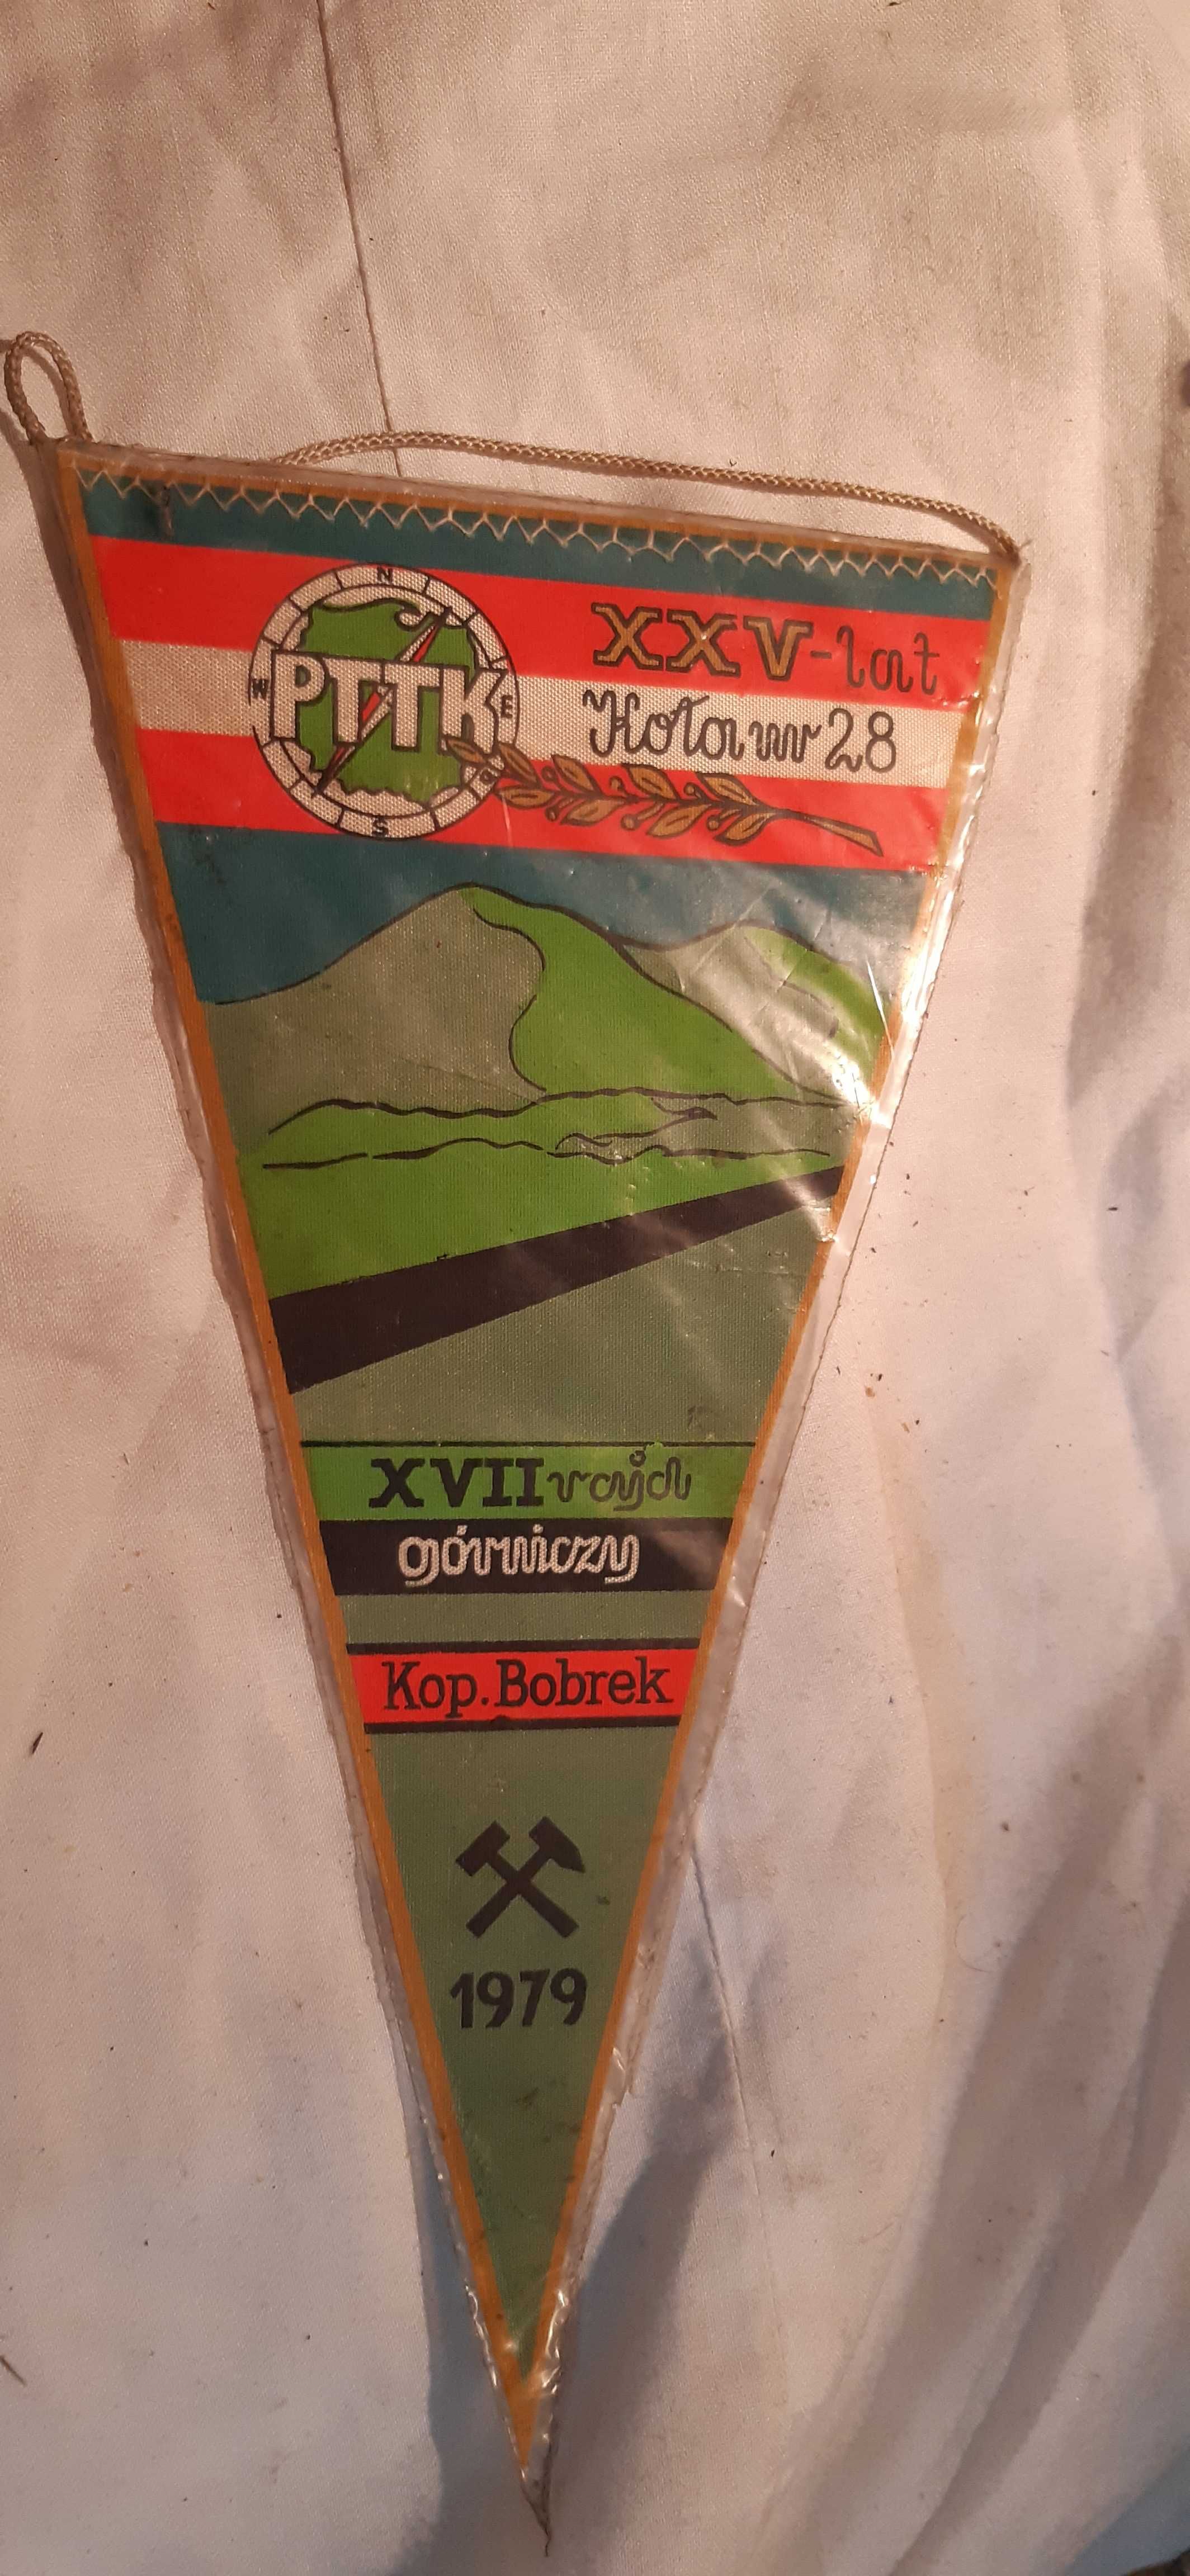 stary proporczyk górniczy kwk bobrek rajd pttk 1979 rok